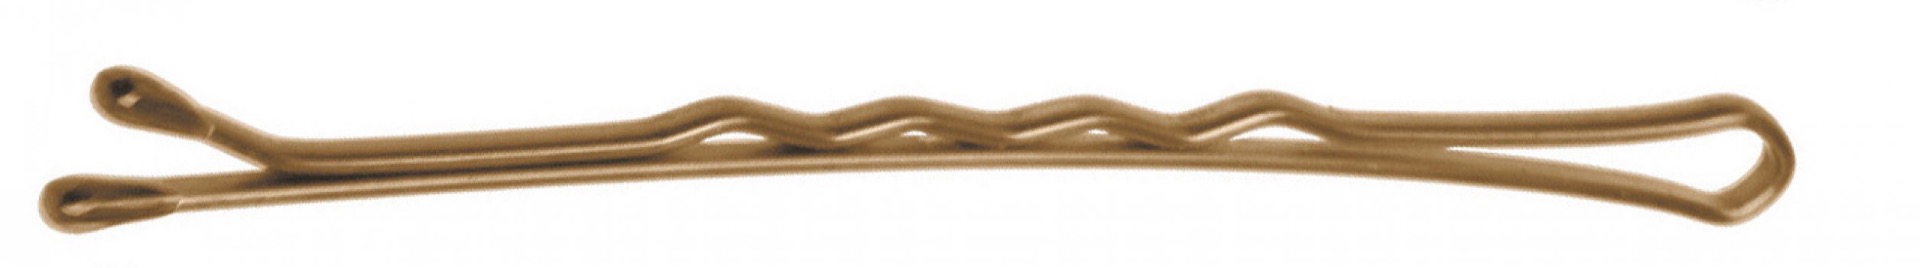 Невидимки 60 мм волна, коричневые (200 гр.) DEWAL SLN60V-3/200